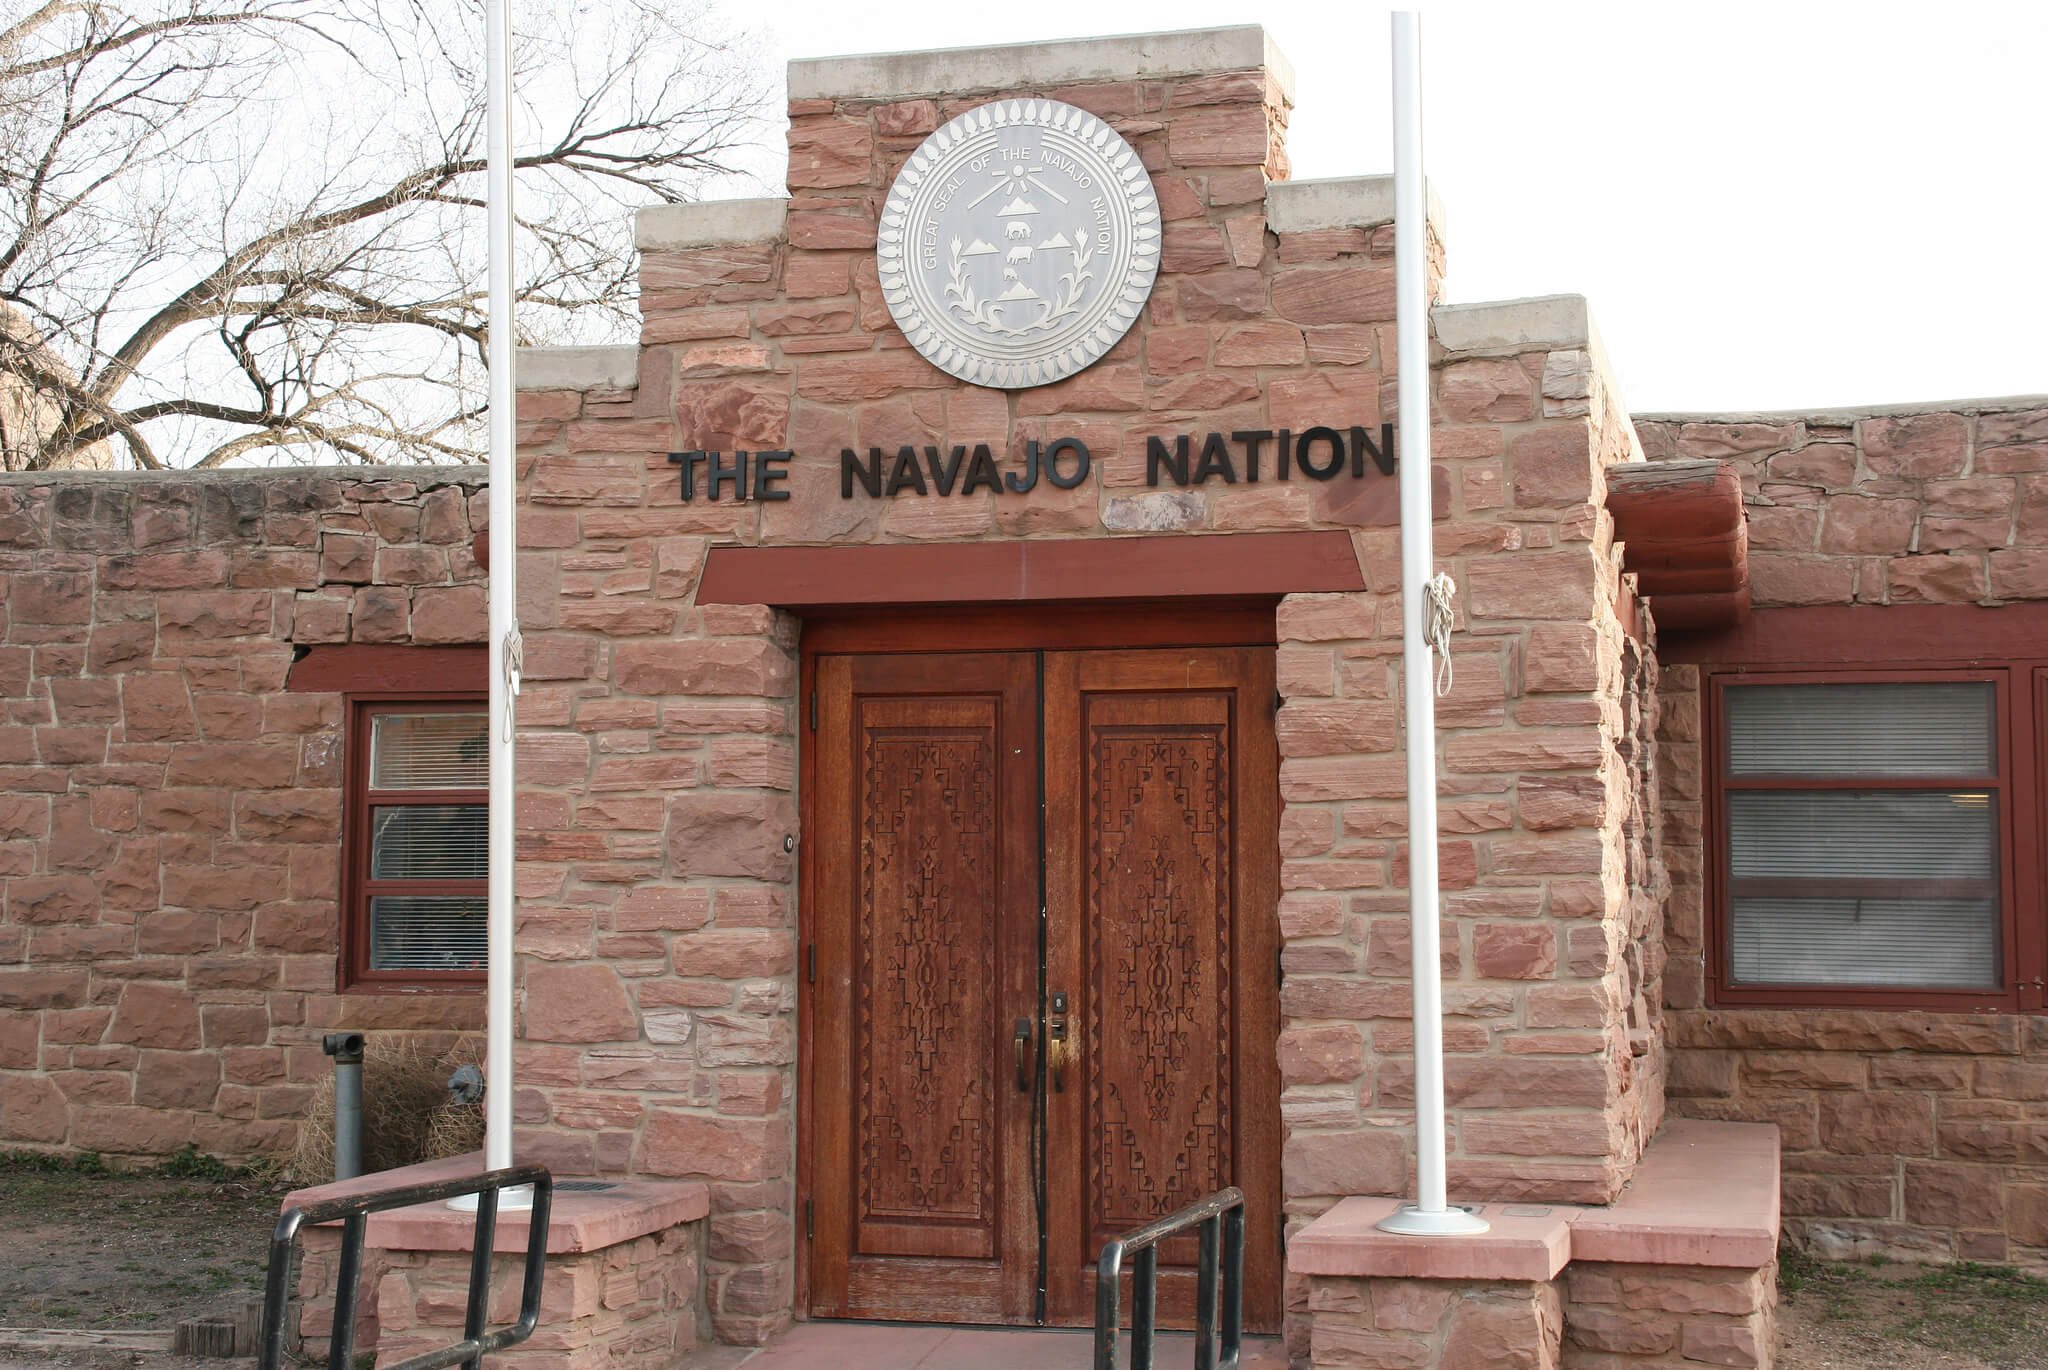 Navajo Nation building.
Flickr User Terry Feuerborn